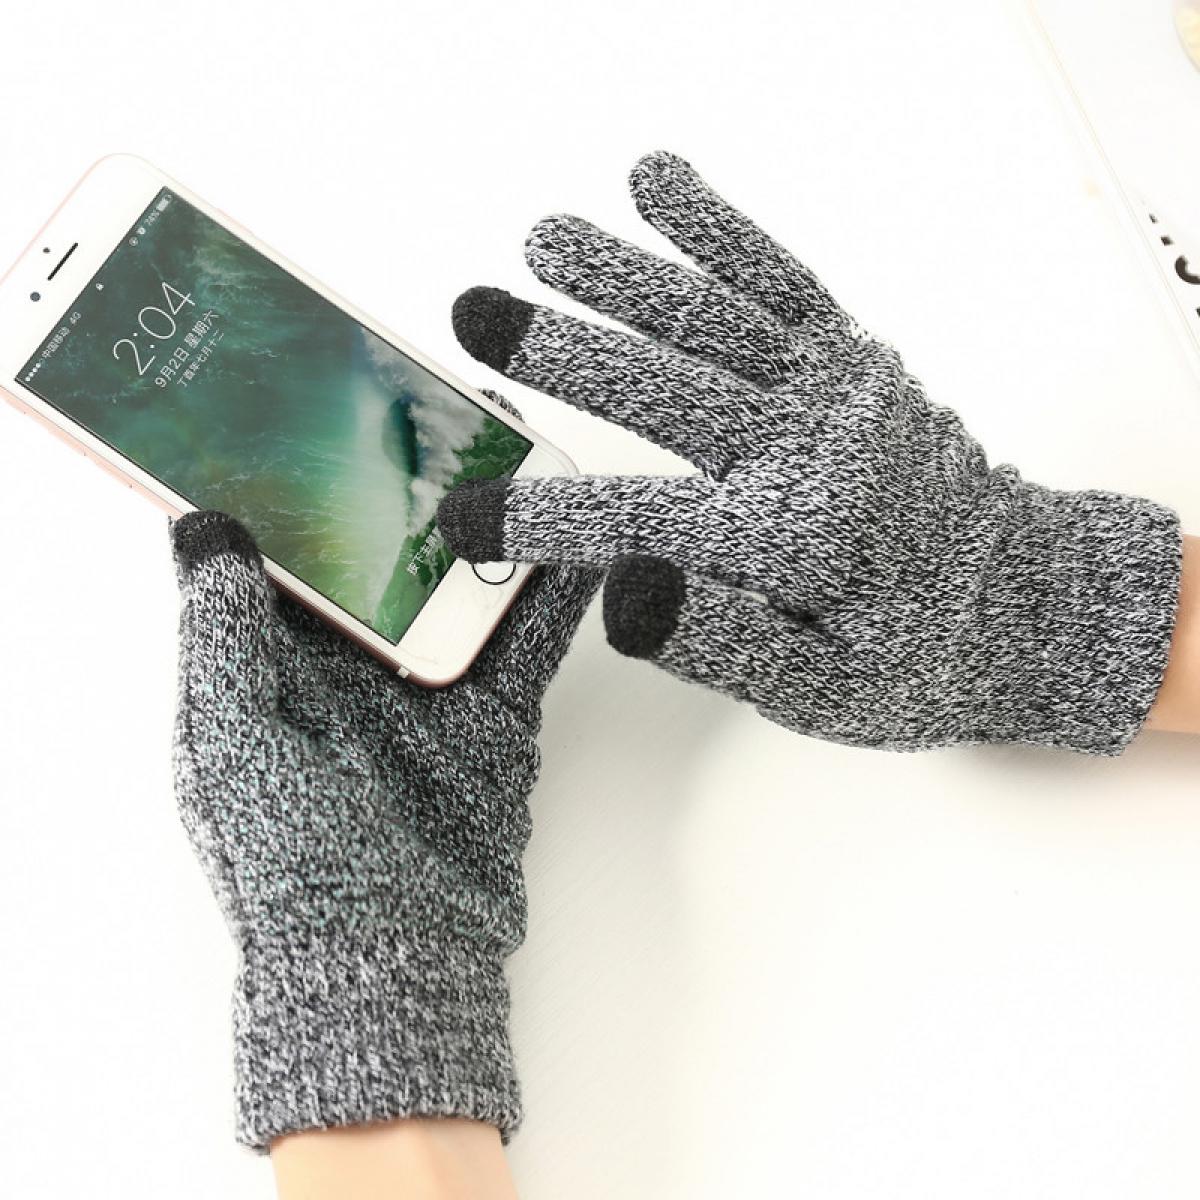 Shot - Gants Homme tactiles pour SONY Xperia XA1 Smartphone Taille M 3 doigts Hiver (GRIS) - Autres accessoires smartphone